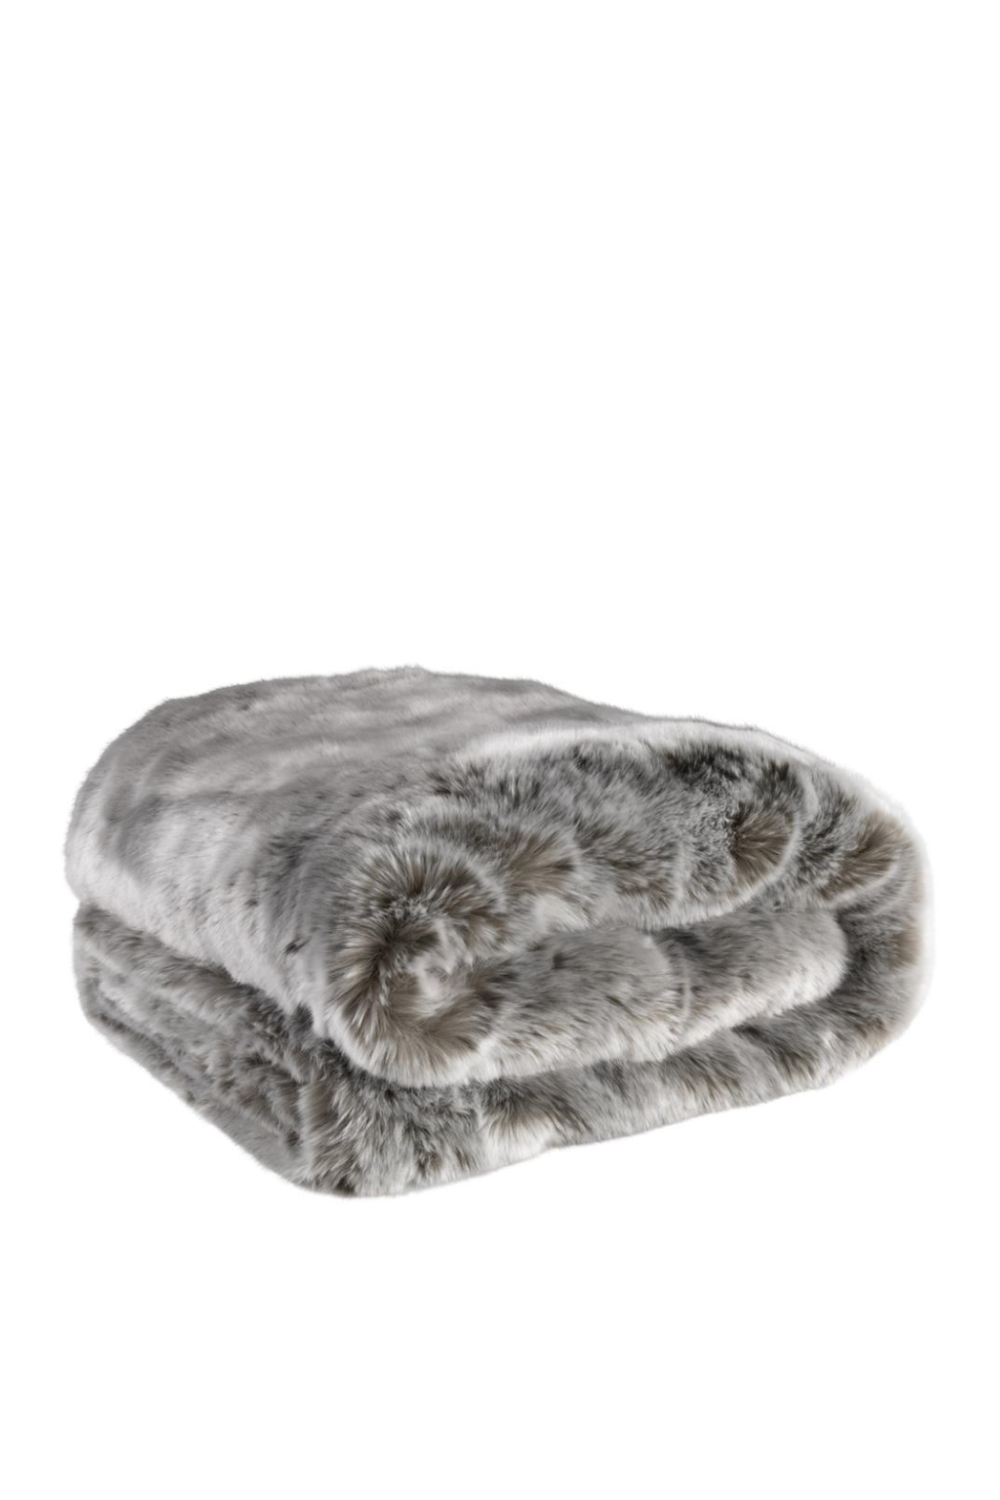 Soft Textured Gray Faux Fur Fabric Throw - Eichholtz Alaska | OROA